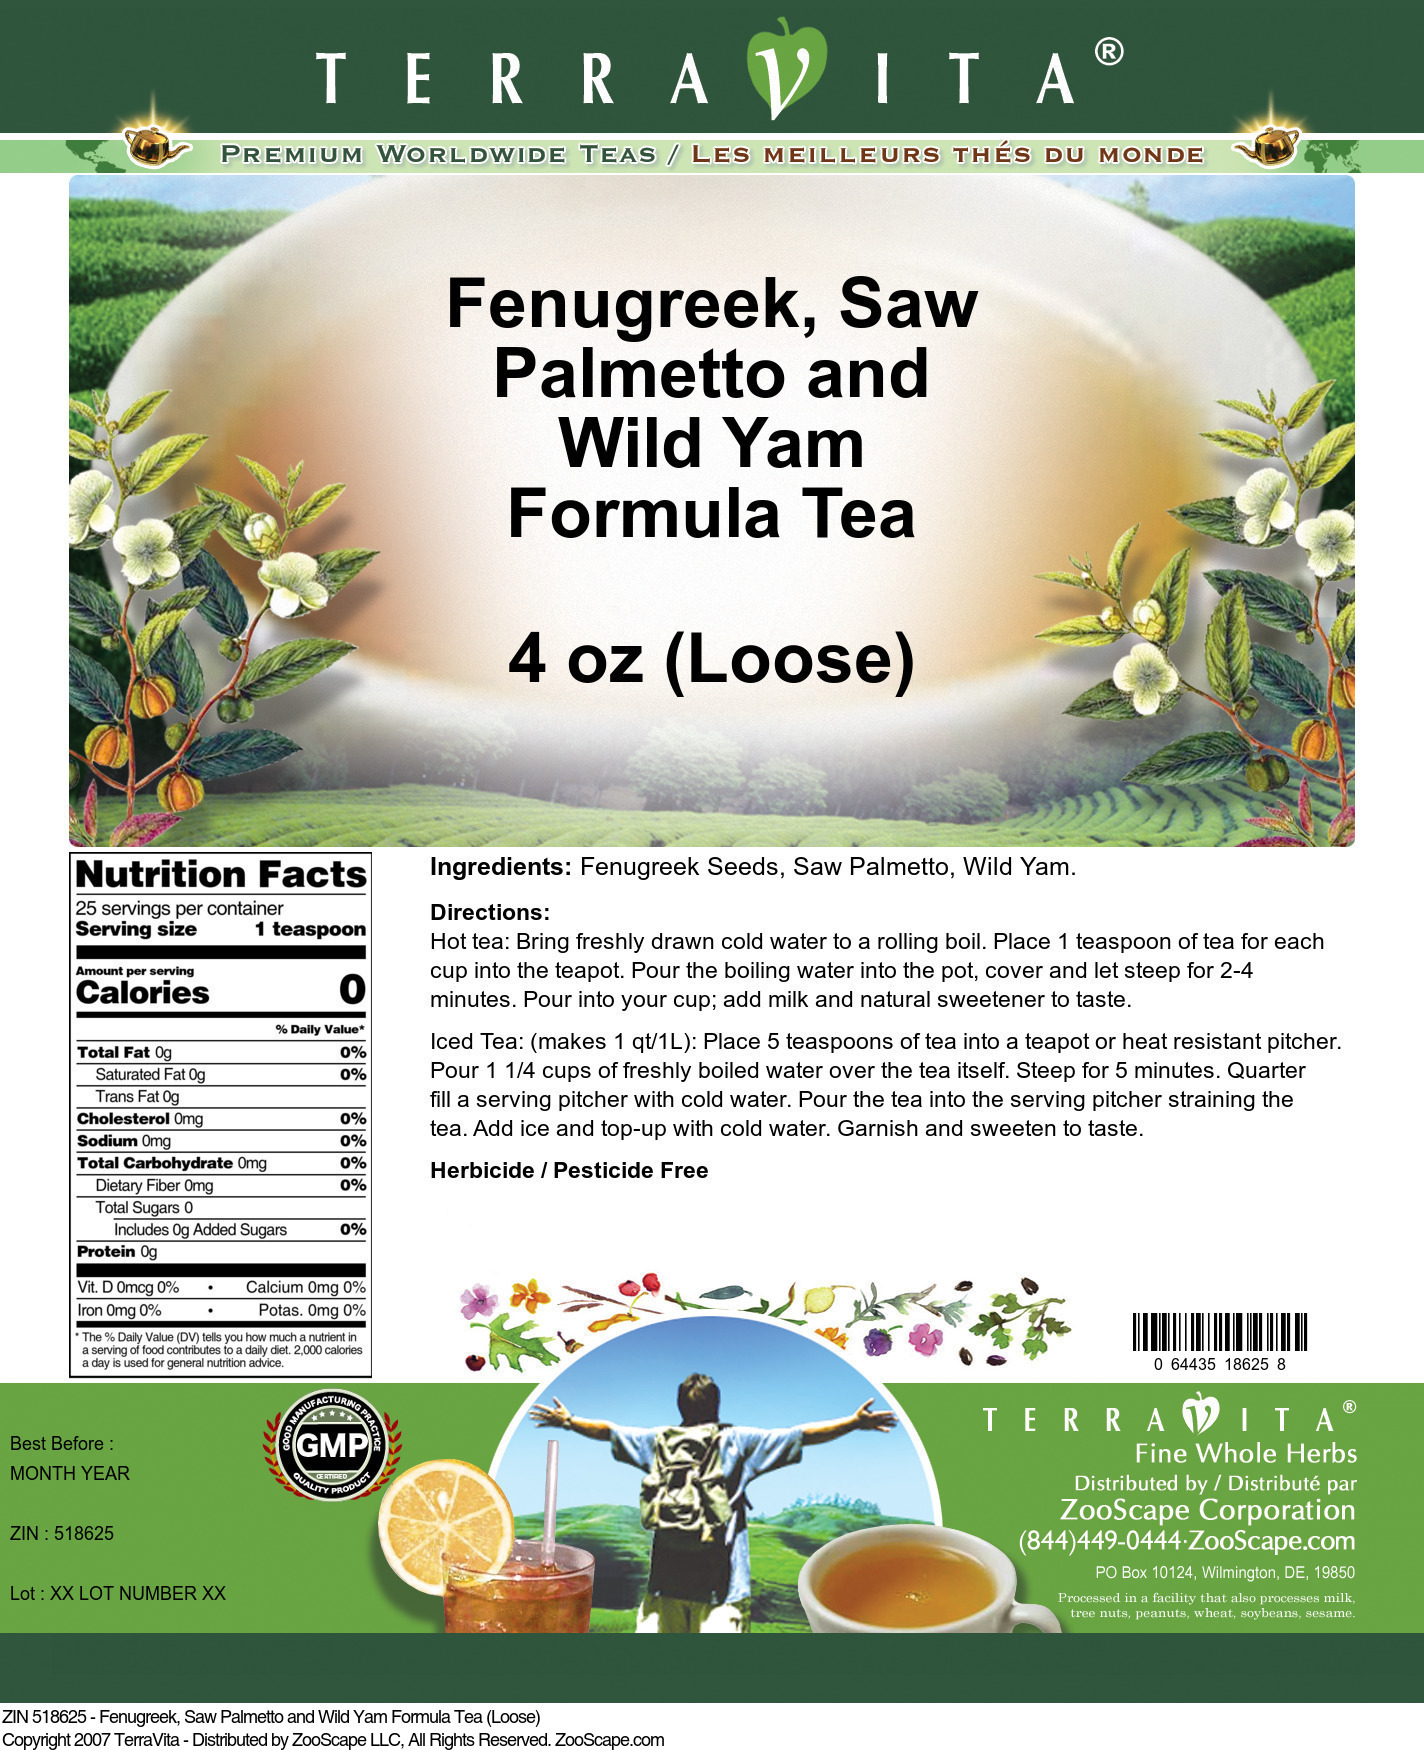 Fenugreek, Saw Palmetto and Wild Yam Formula Tea (Loose) - Label